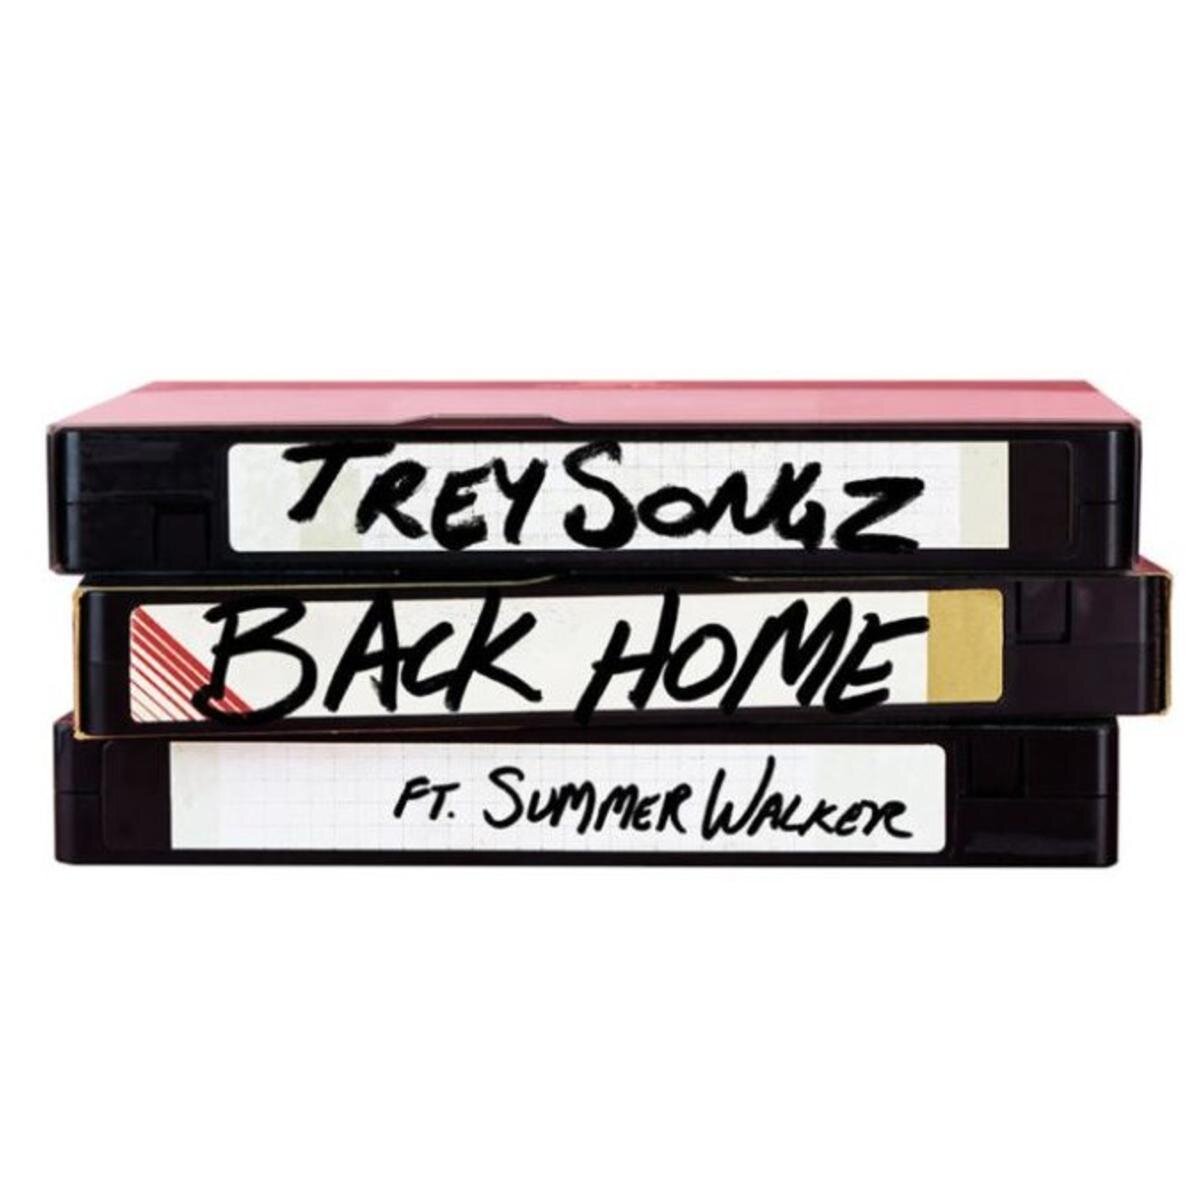 Trey Songz ft Summer Walker "Back Home" (Copy)